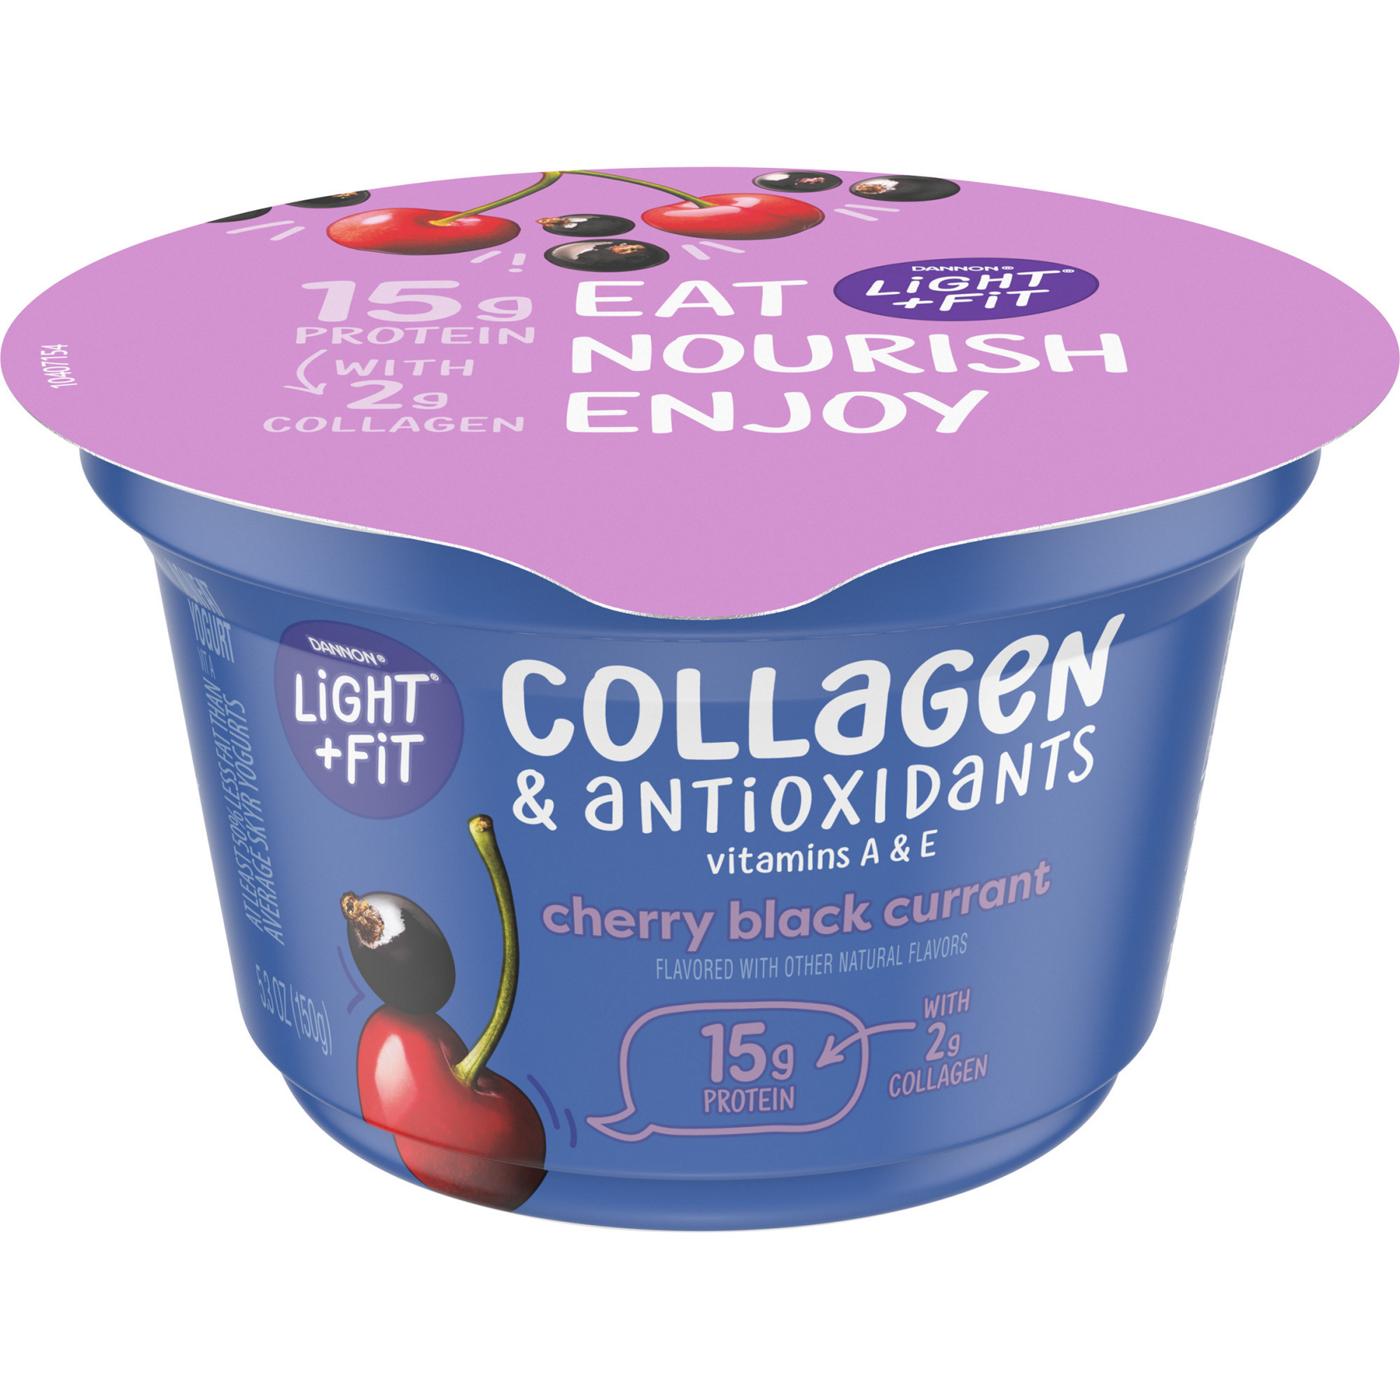 Dannon Light & Fit Non-Fat Cherry Black Currant Yogurt With Collagen & Antioxidants; image 1 of 8